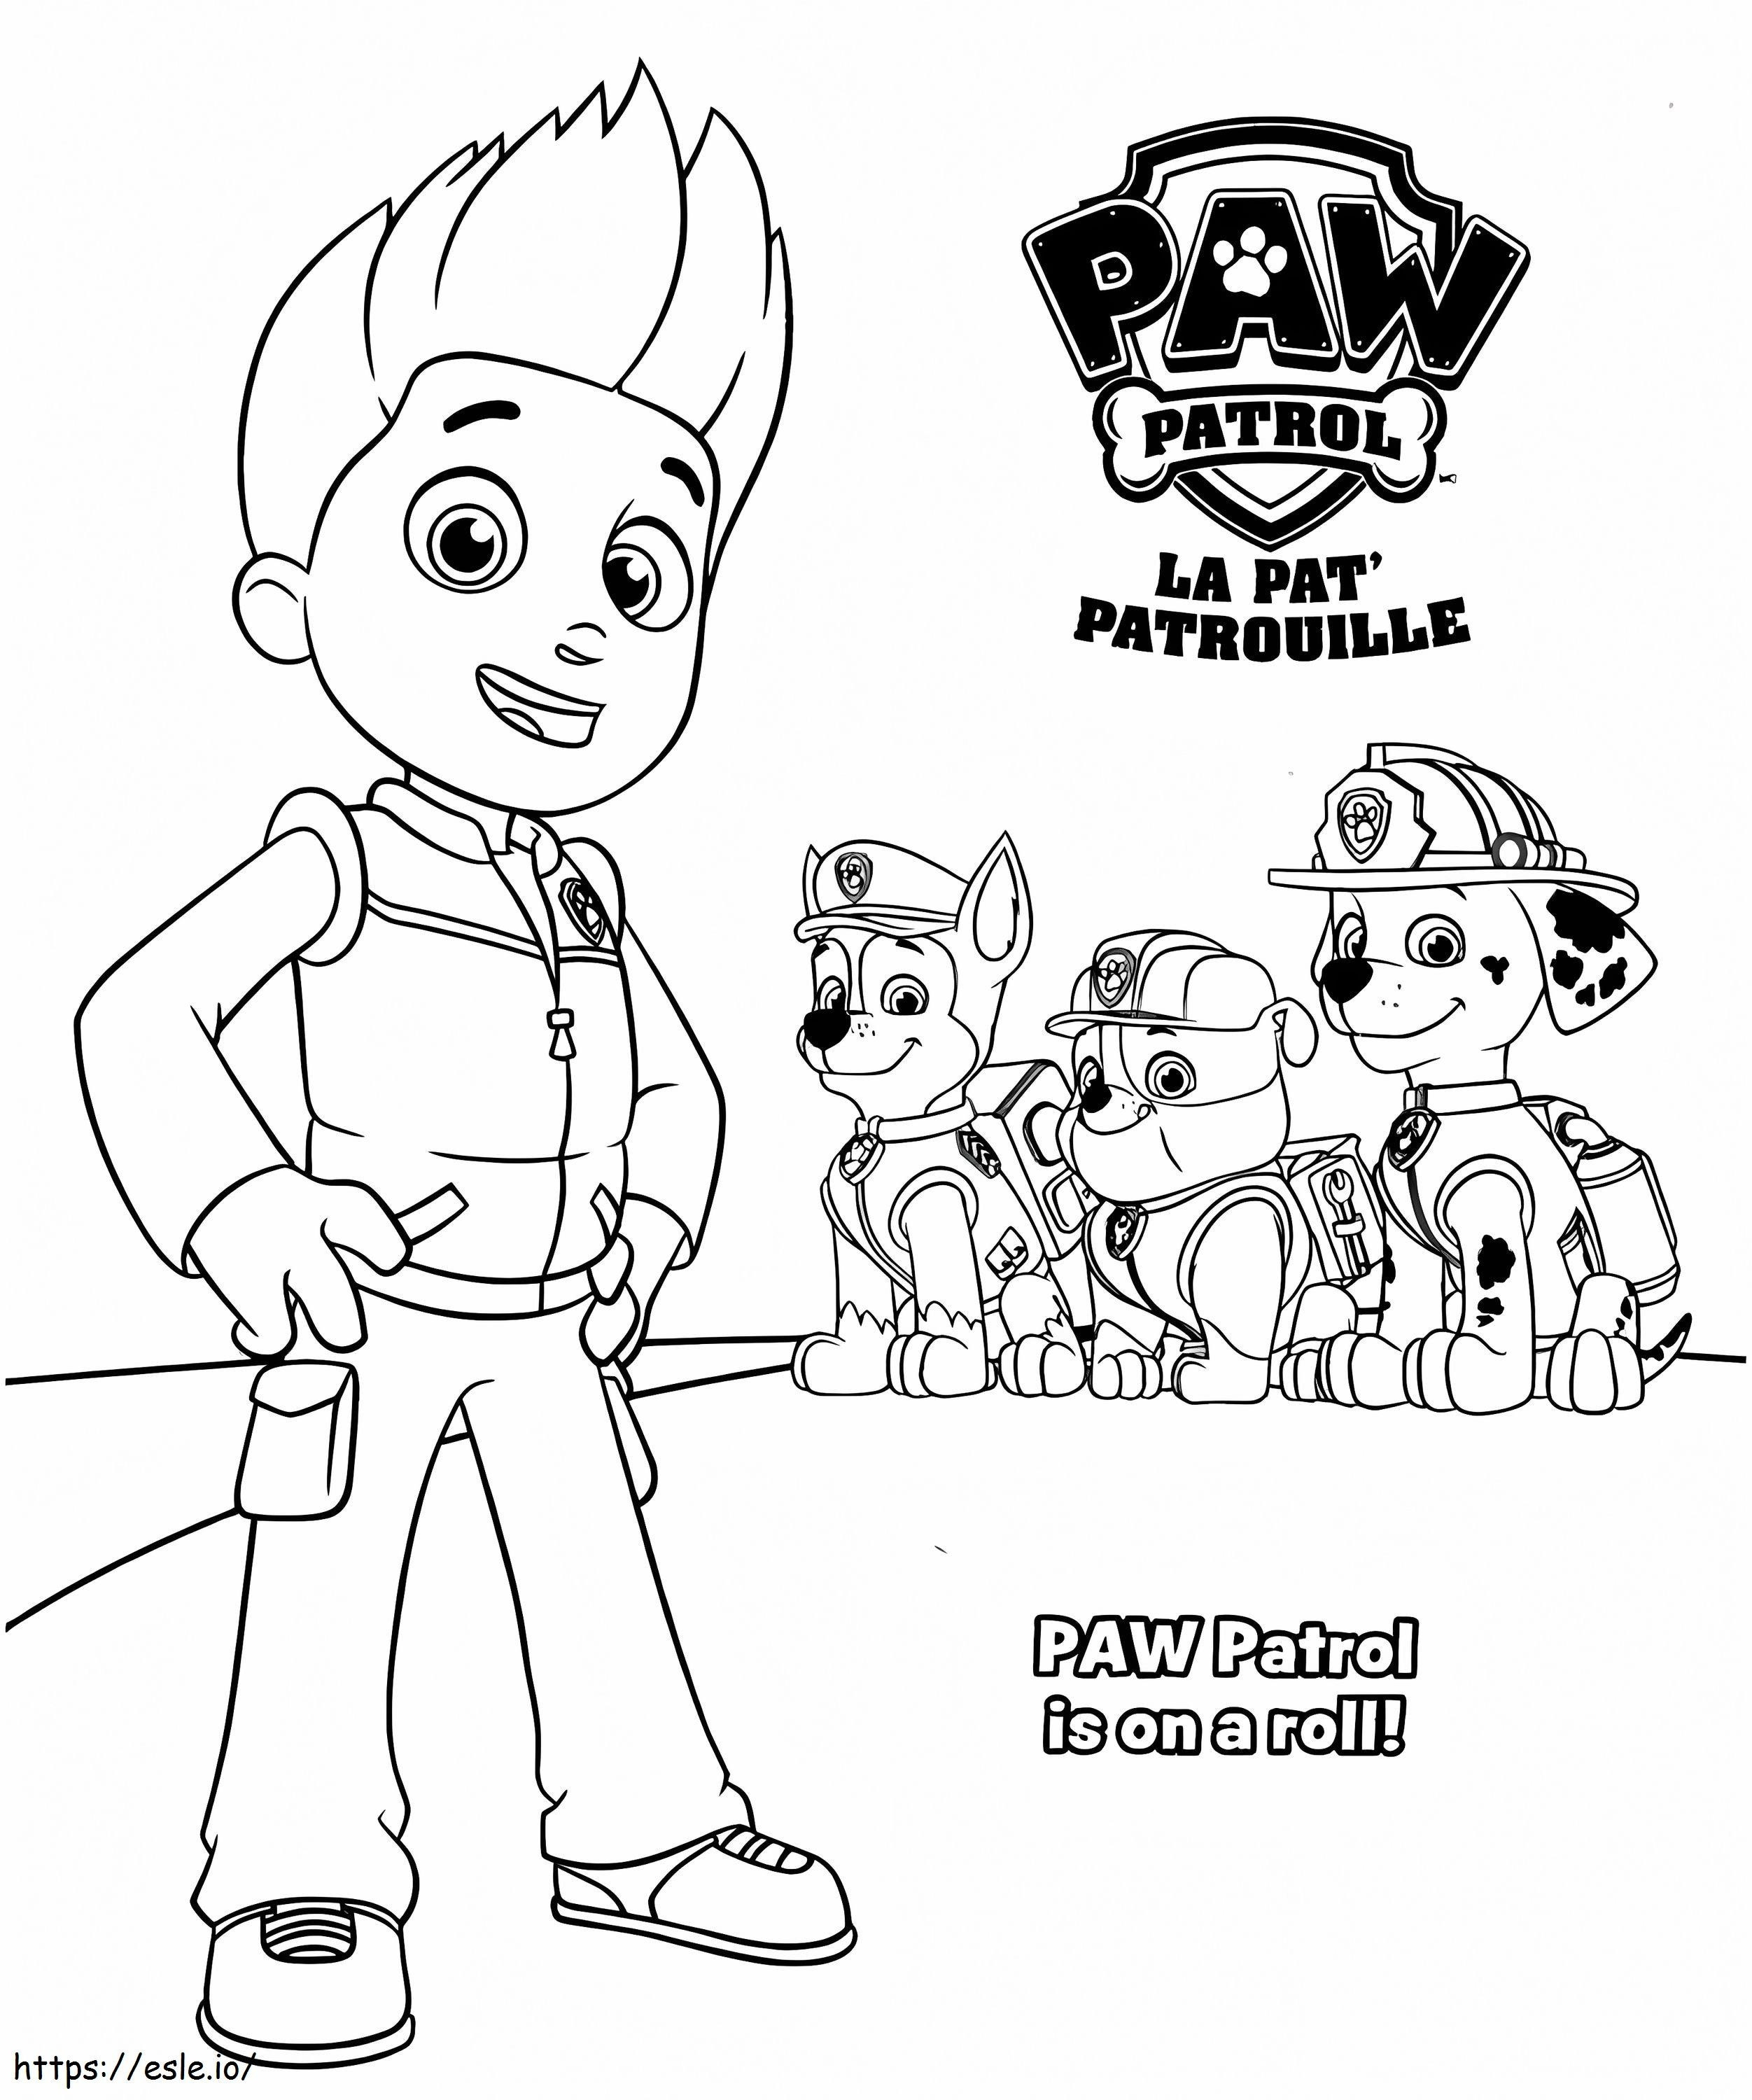 Ryder paw patrol coloring page